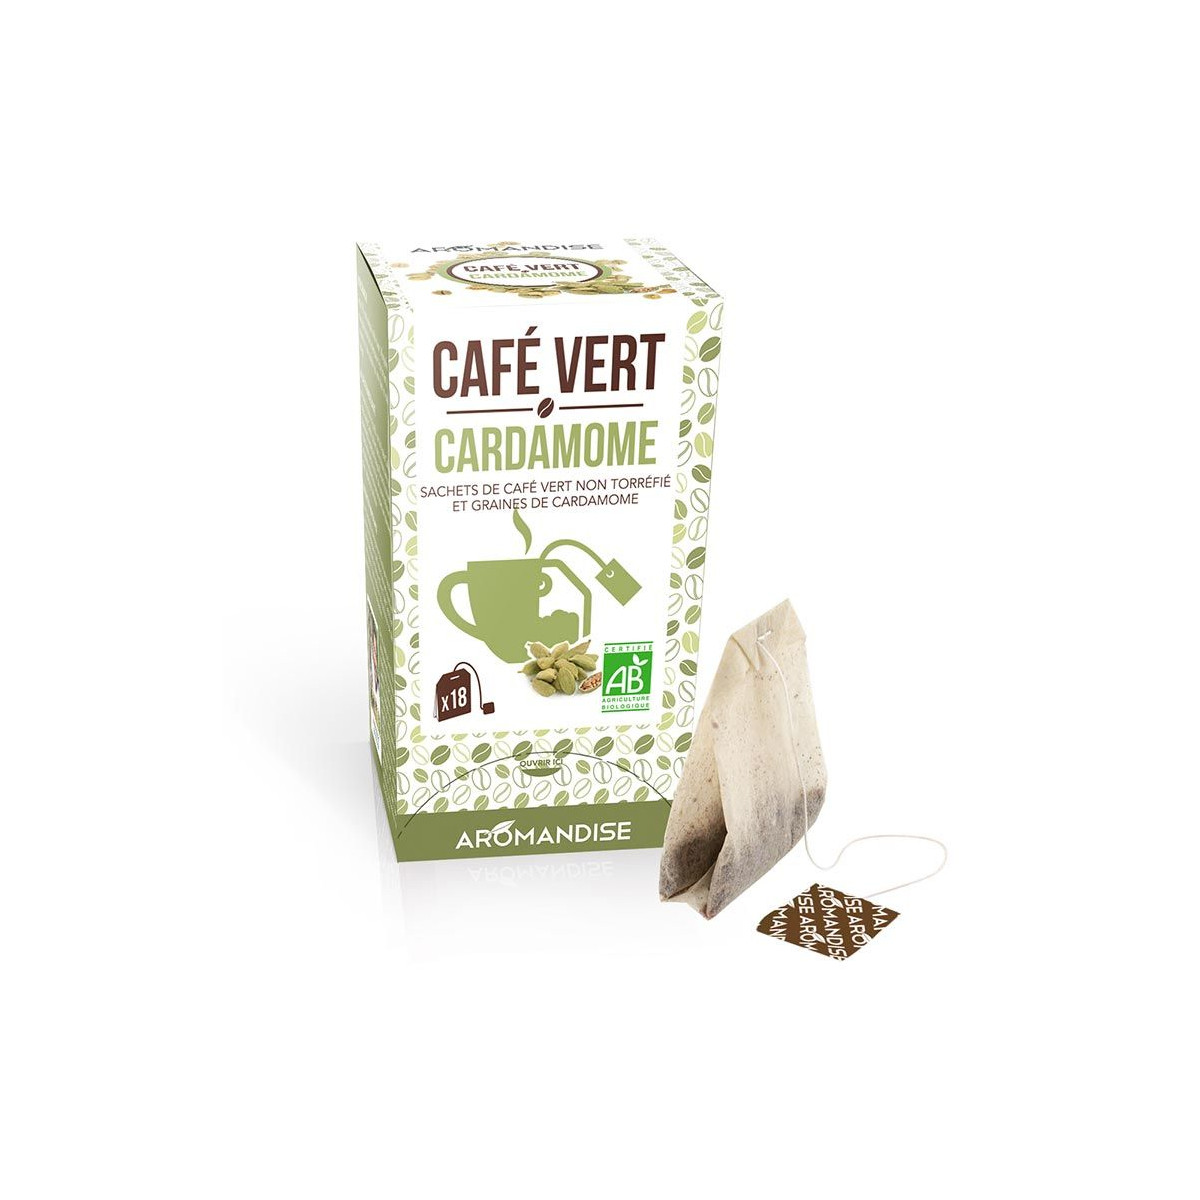 Café vert cardamome - Aromandise - Packaging